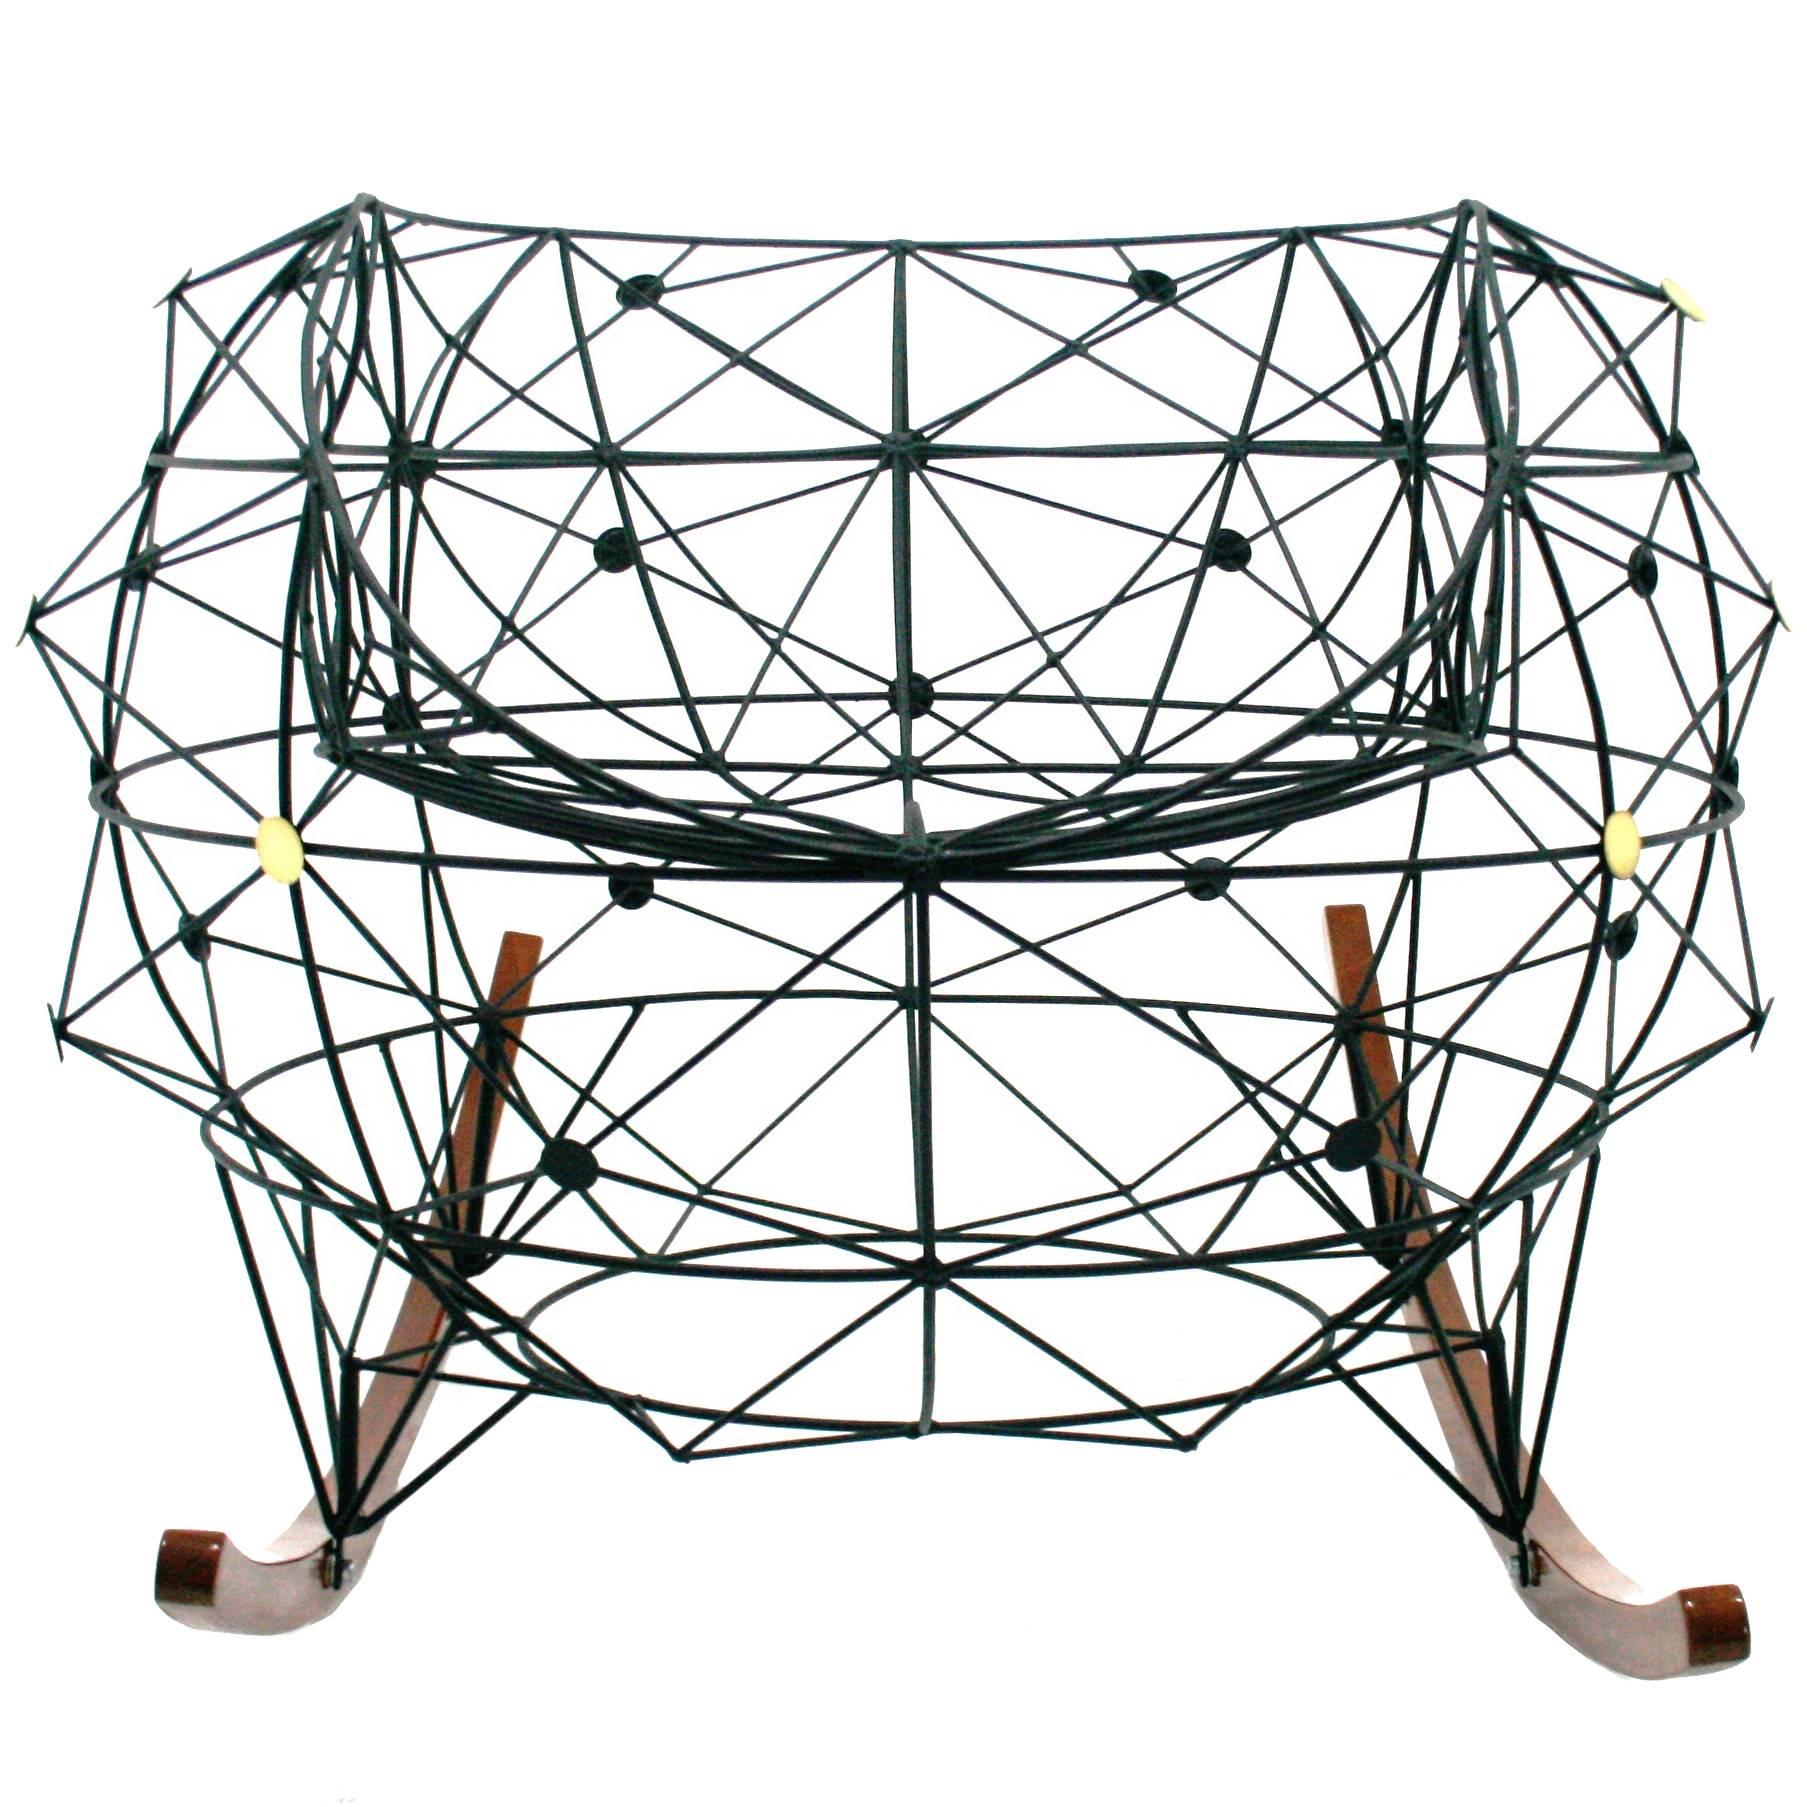 Baltasar Portillo "Constellation Rocker" Functional Art Chair 2016 For Sale